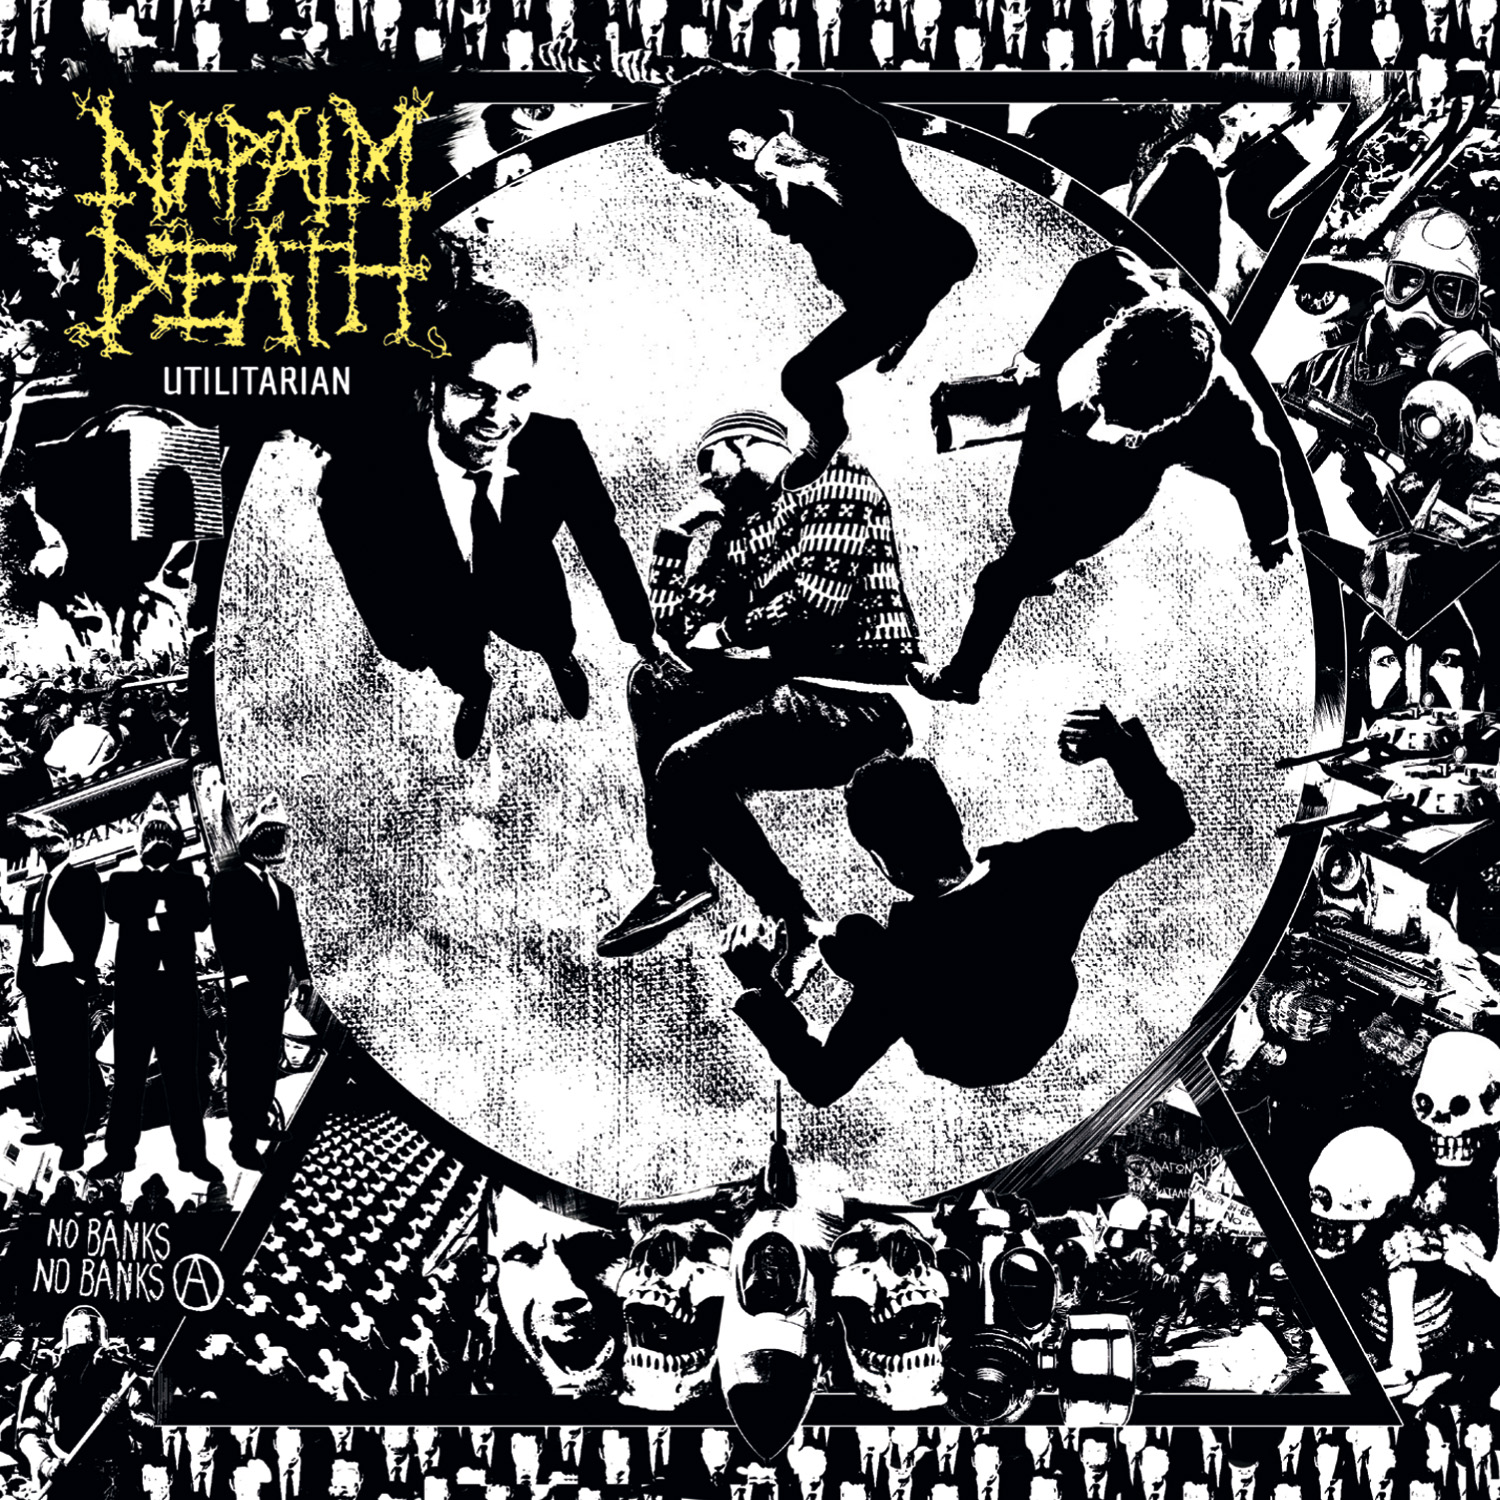 Reseña Utilitarian – Napalm Death